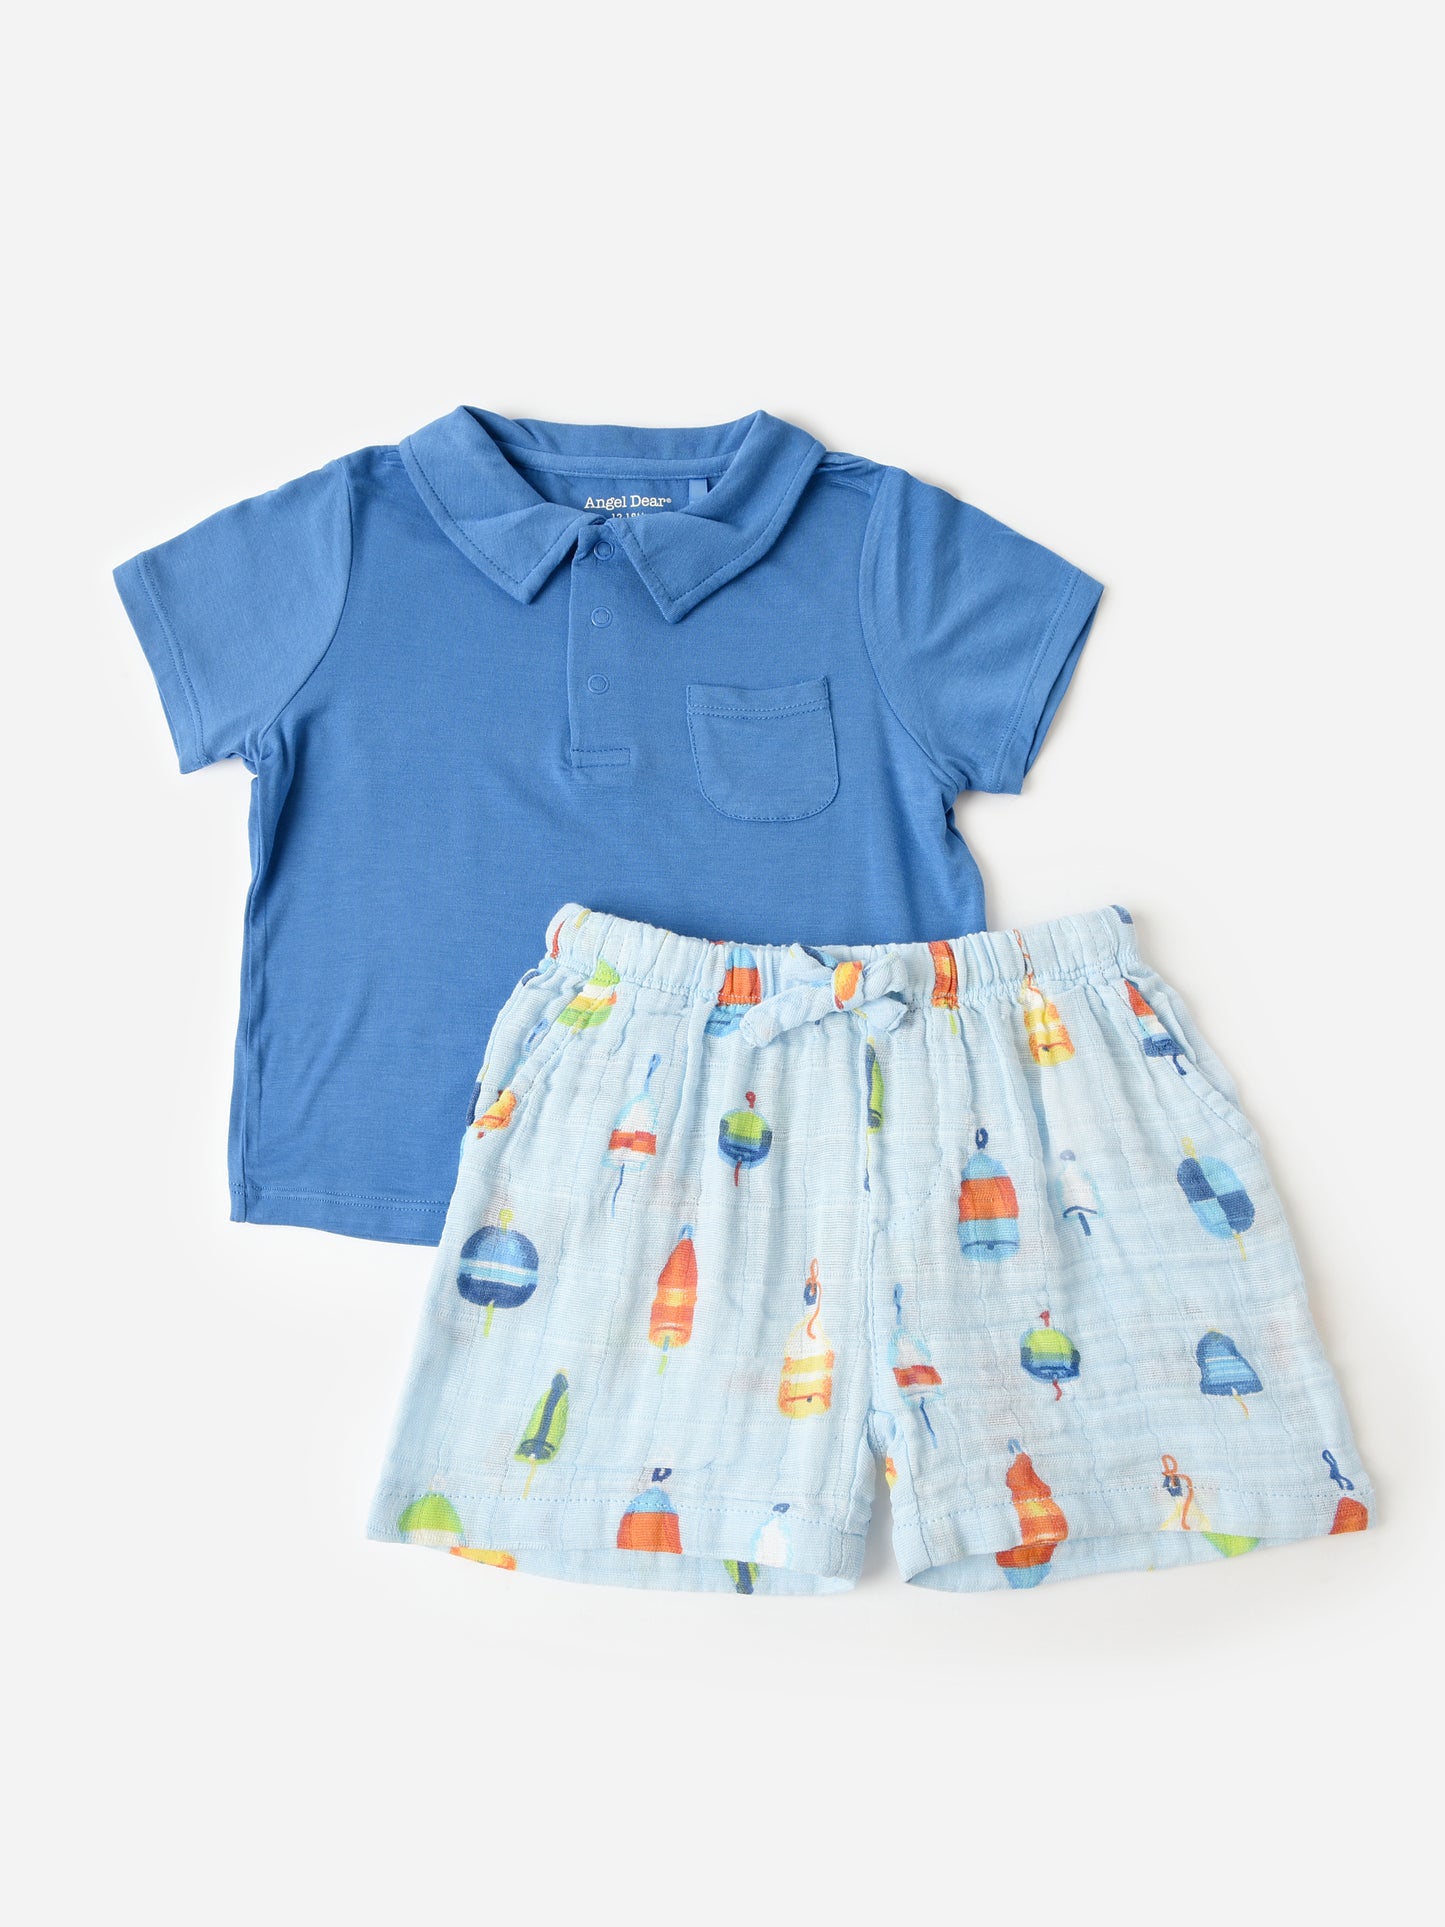 Angel Dear Baby Boys' Muslin Short + Polo Shirt Set